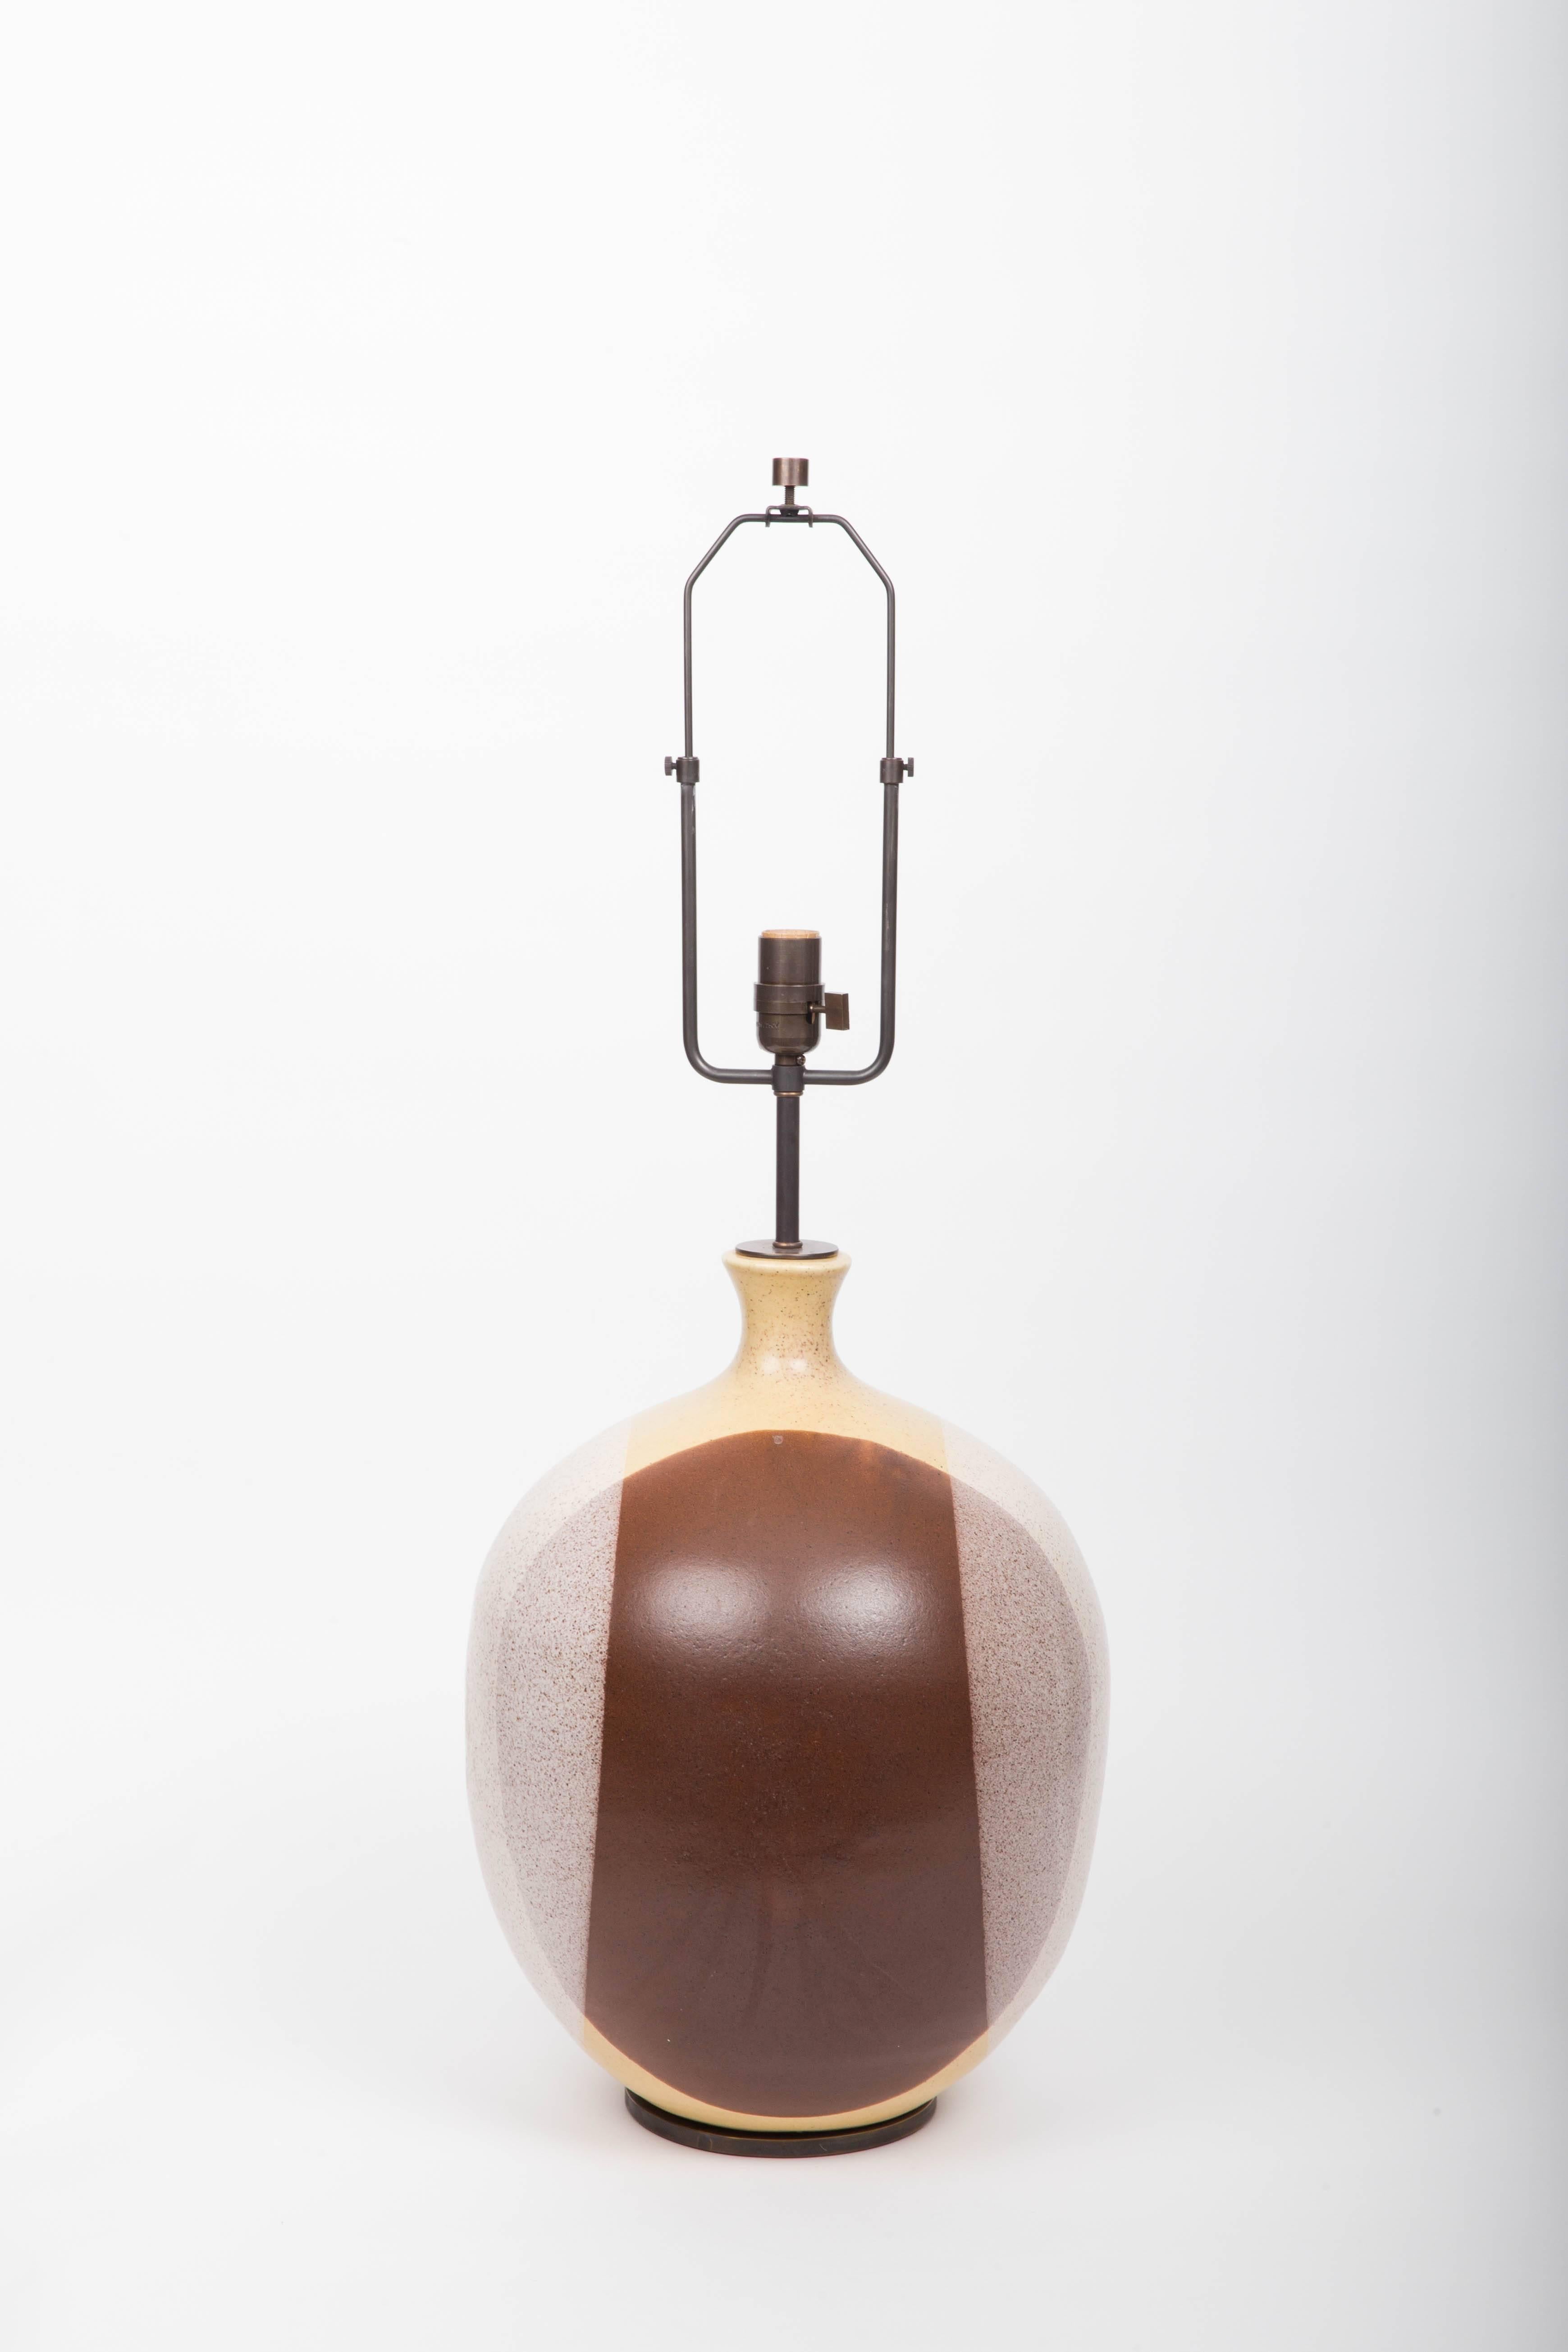 Ceramic Lamp, Attributed to David Cressey 1